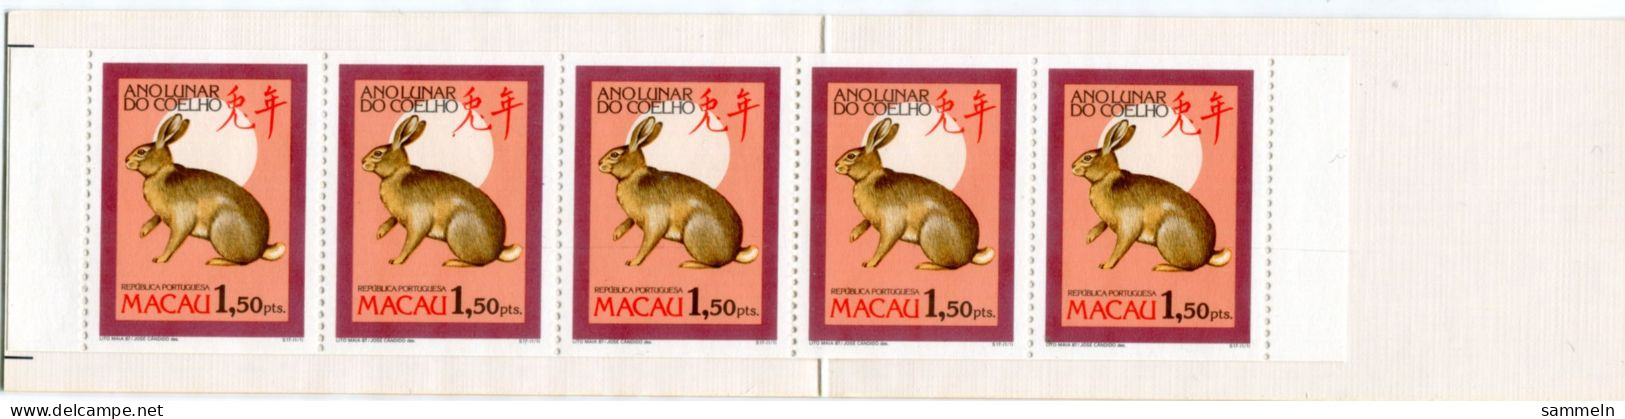 MACAO 568 C MH Mnh - Chinesisches Jahr Des Kaninchens, Chinese Year Of The Rabbit, Année Chinoise Du Lapin - MACAU - Markenheftchen